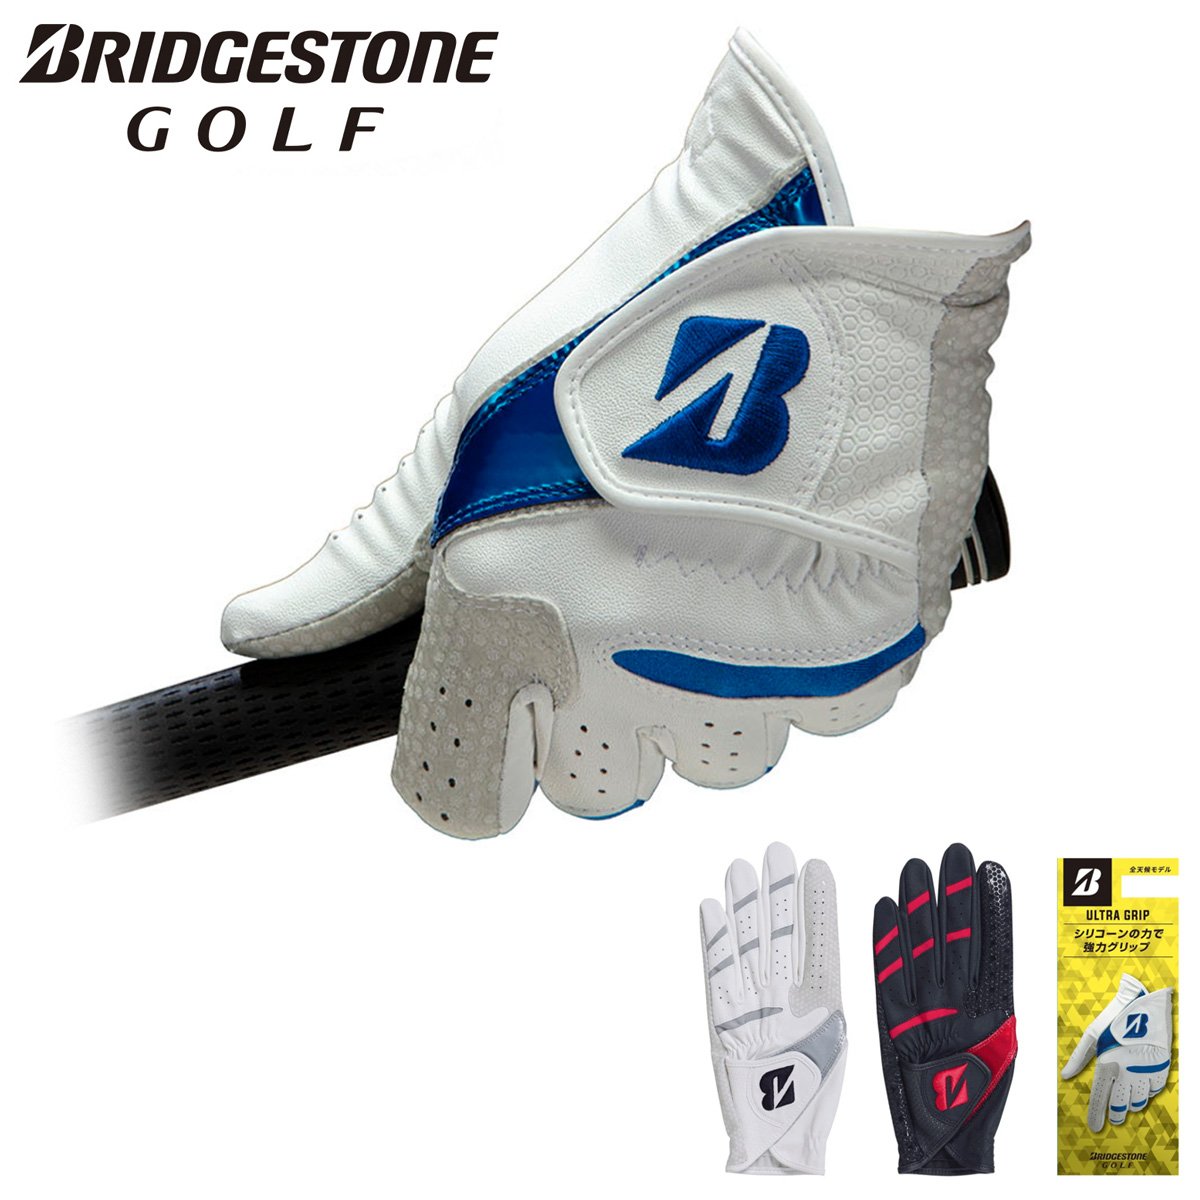 Bridgestone Ultra Grip Golf Glove